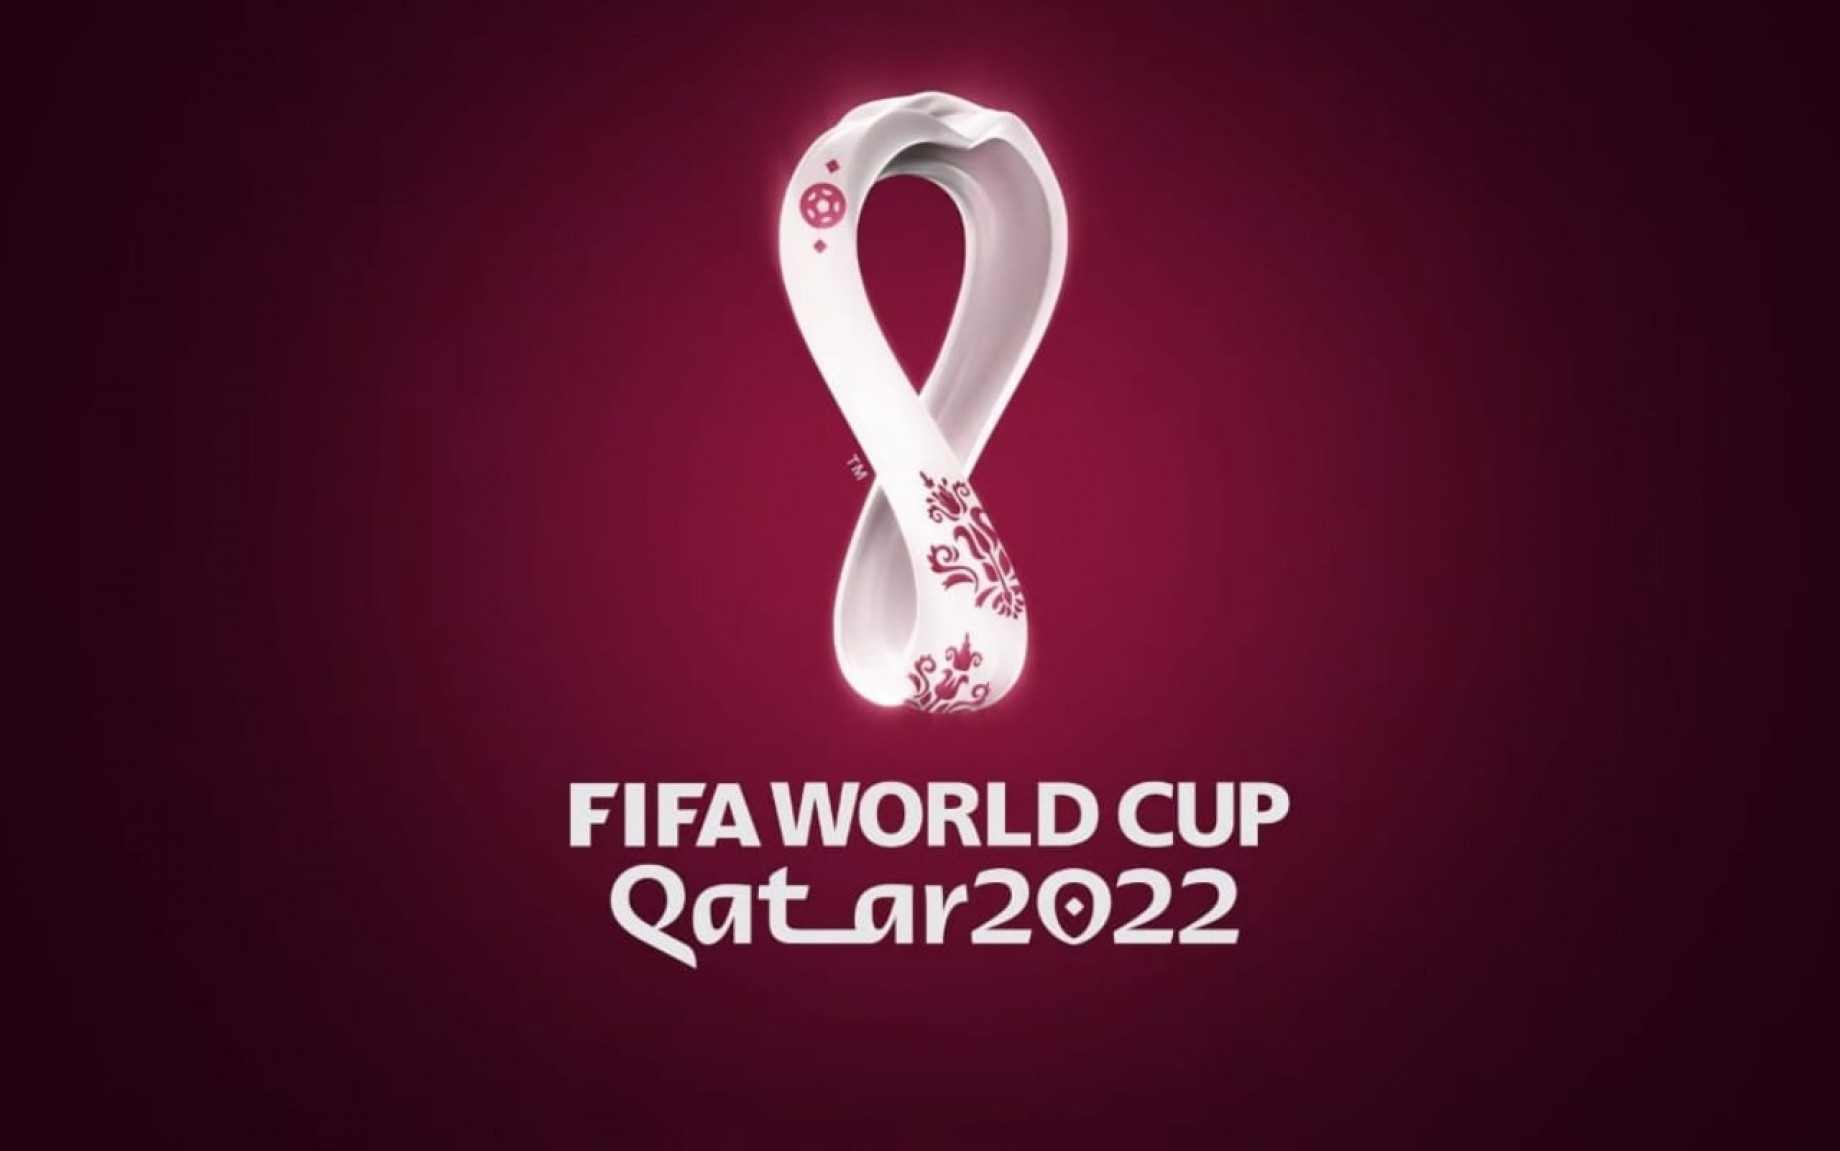 mondiali-qatar-2022-screen-min.jpg